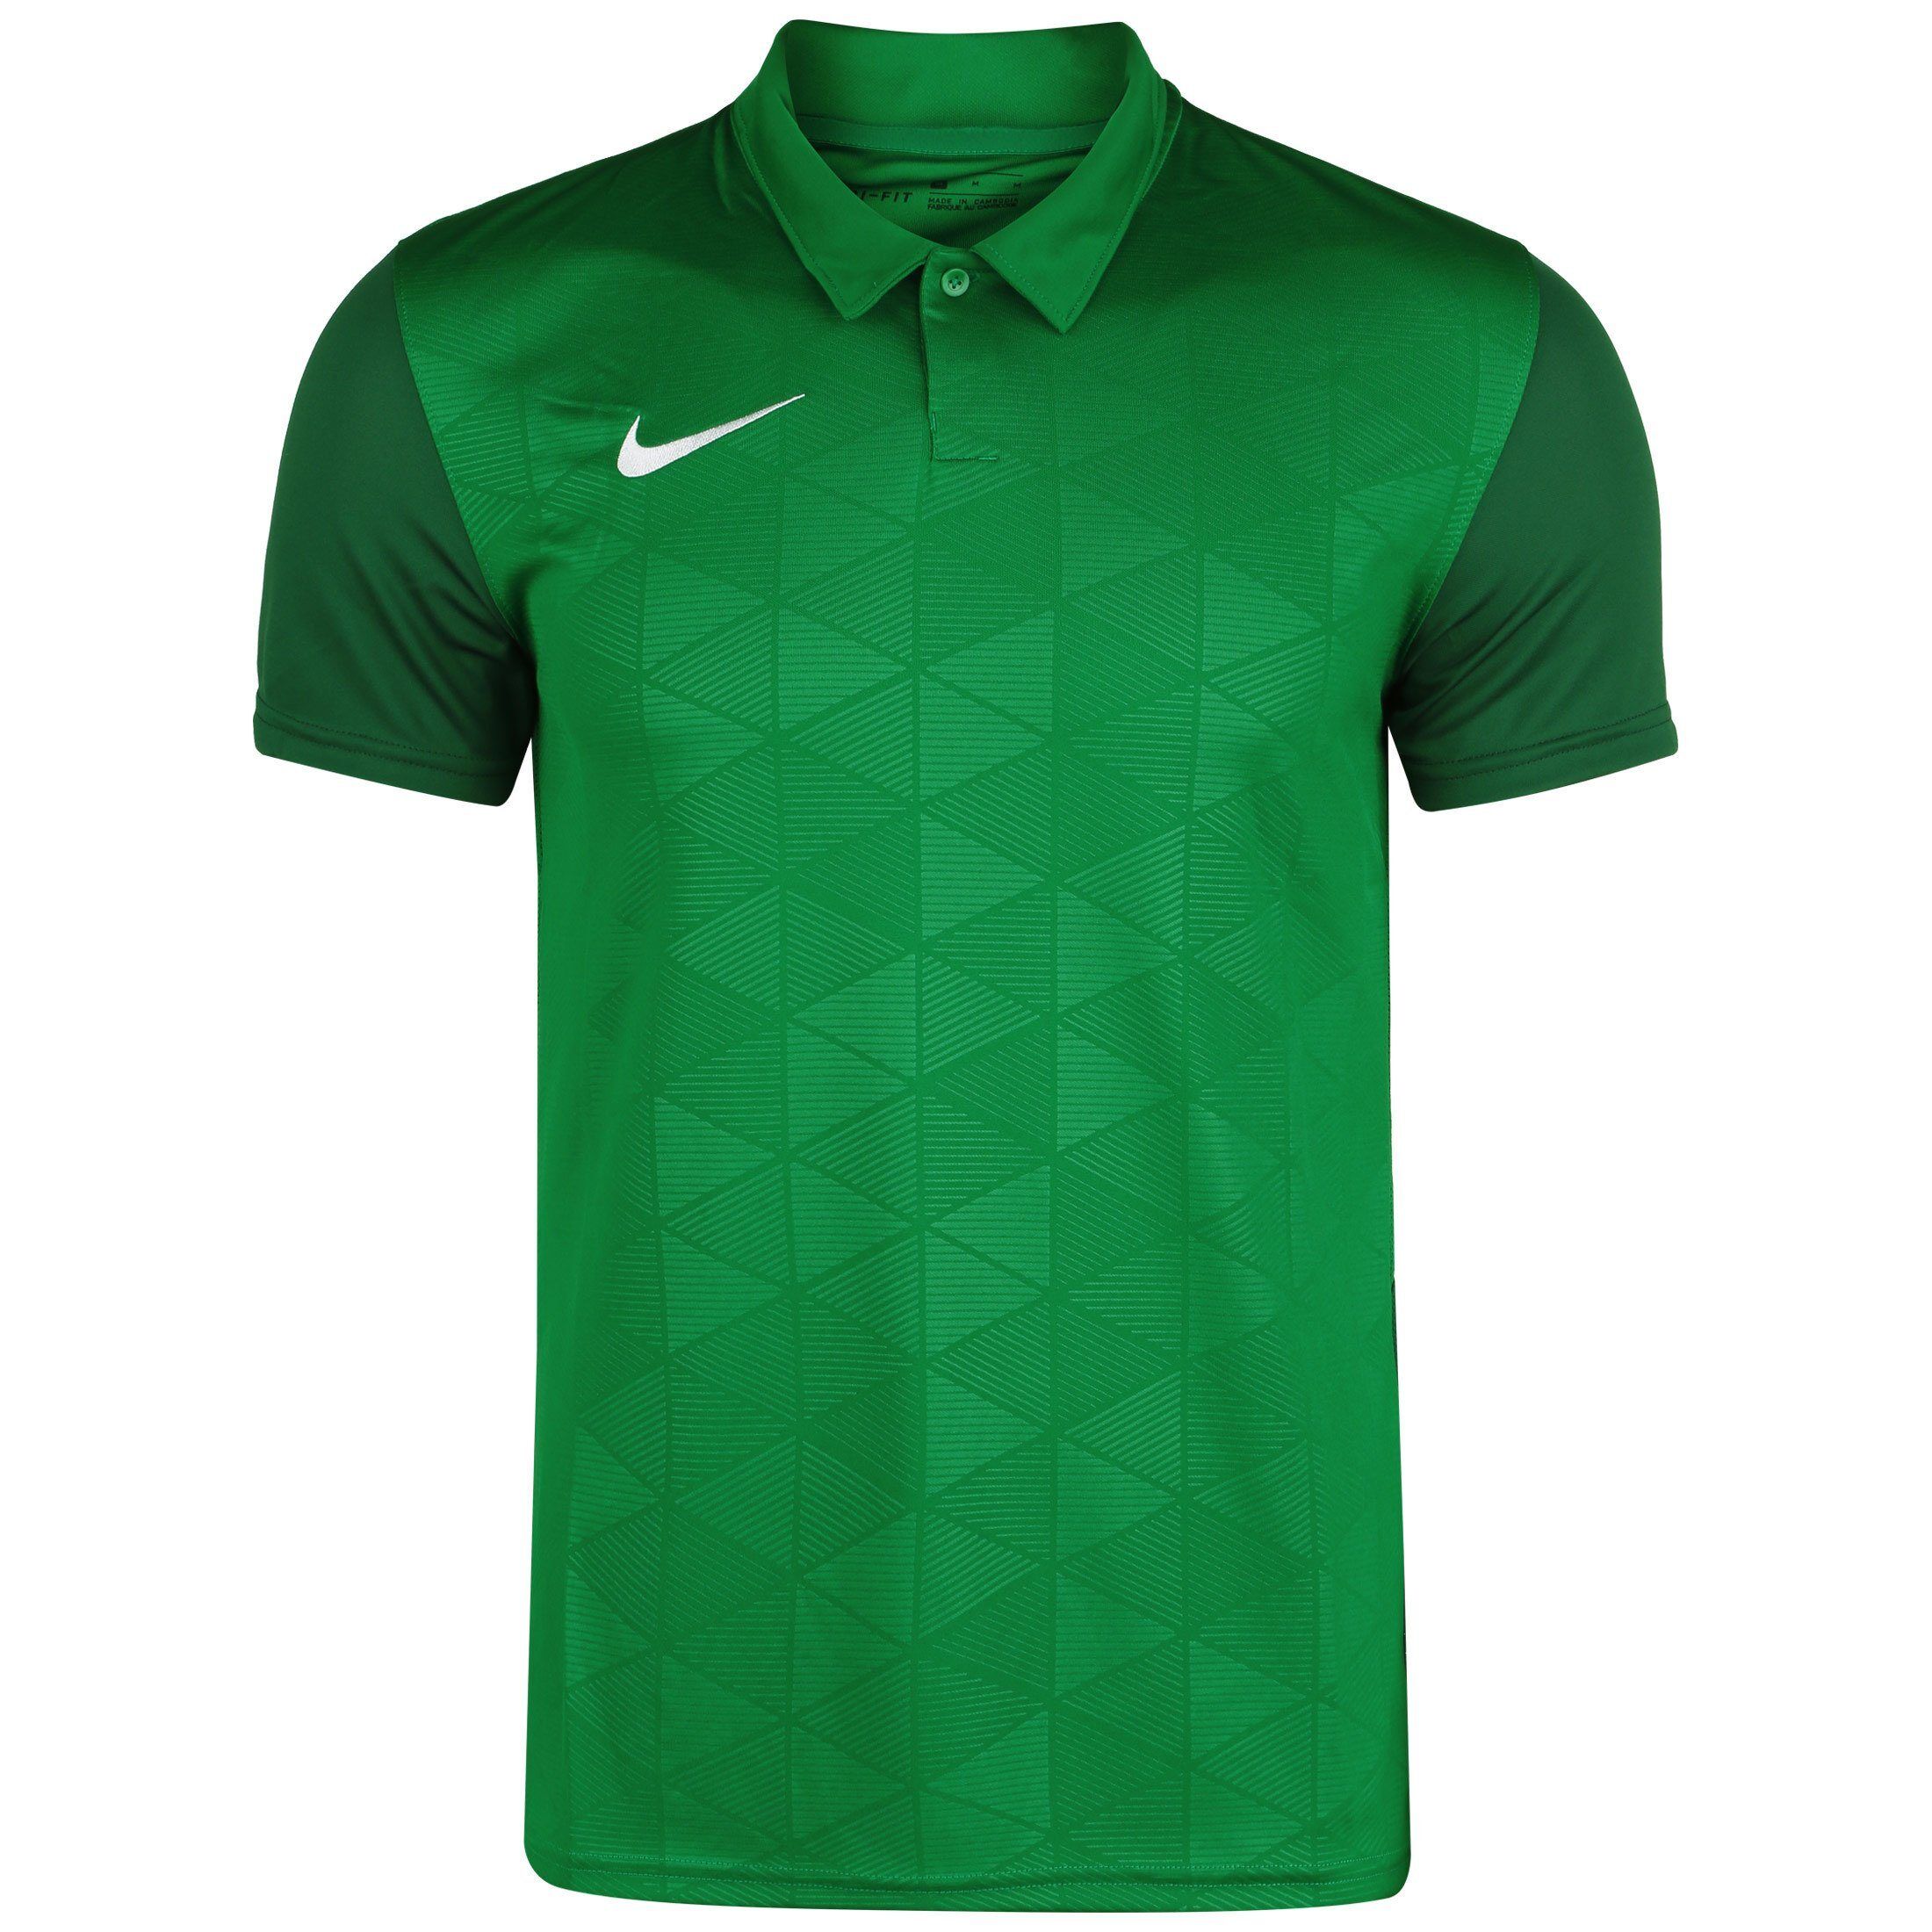 Nike Fußballtrikot »Trophy Iv Jersey«, pine green / gorge green / white